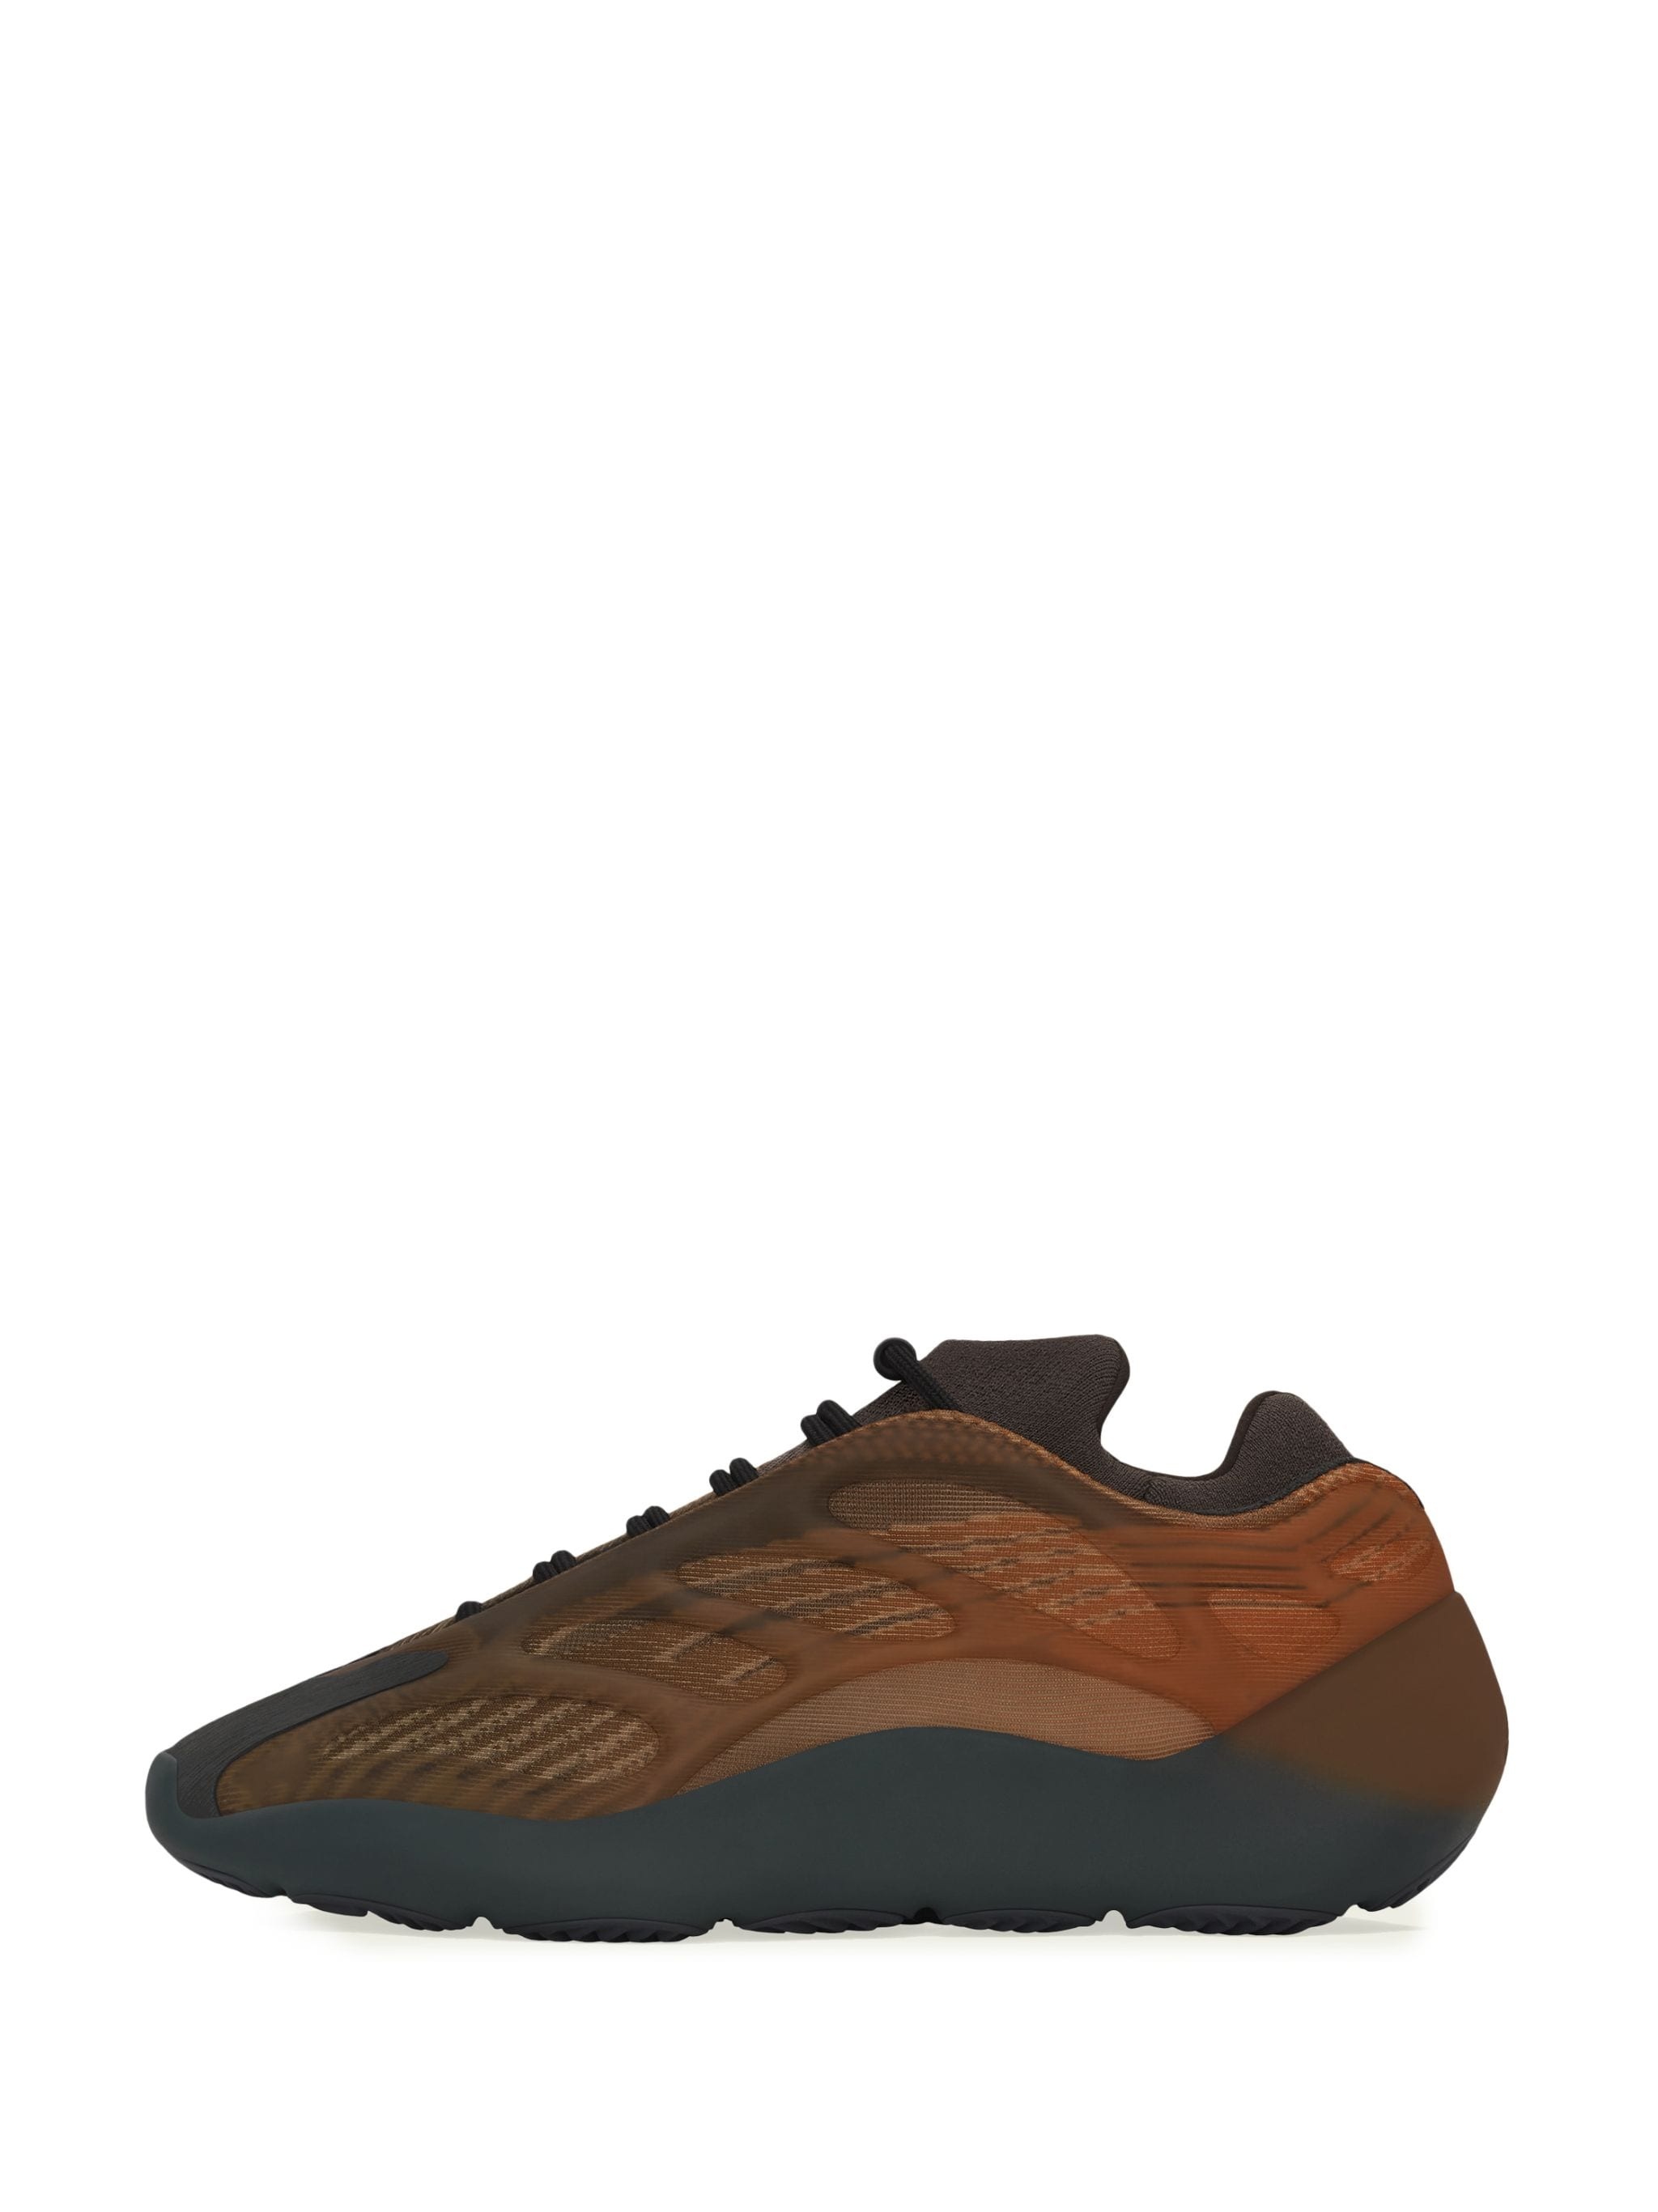 YZY 700 V3 Copper Fade sneakers - 2